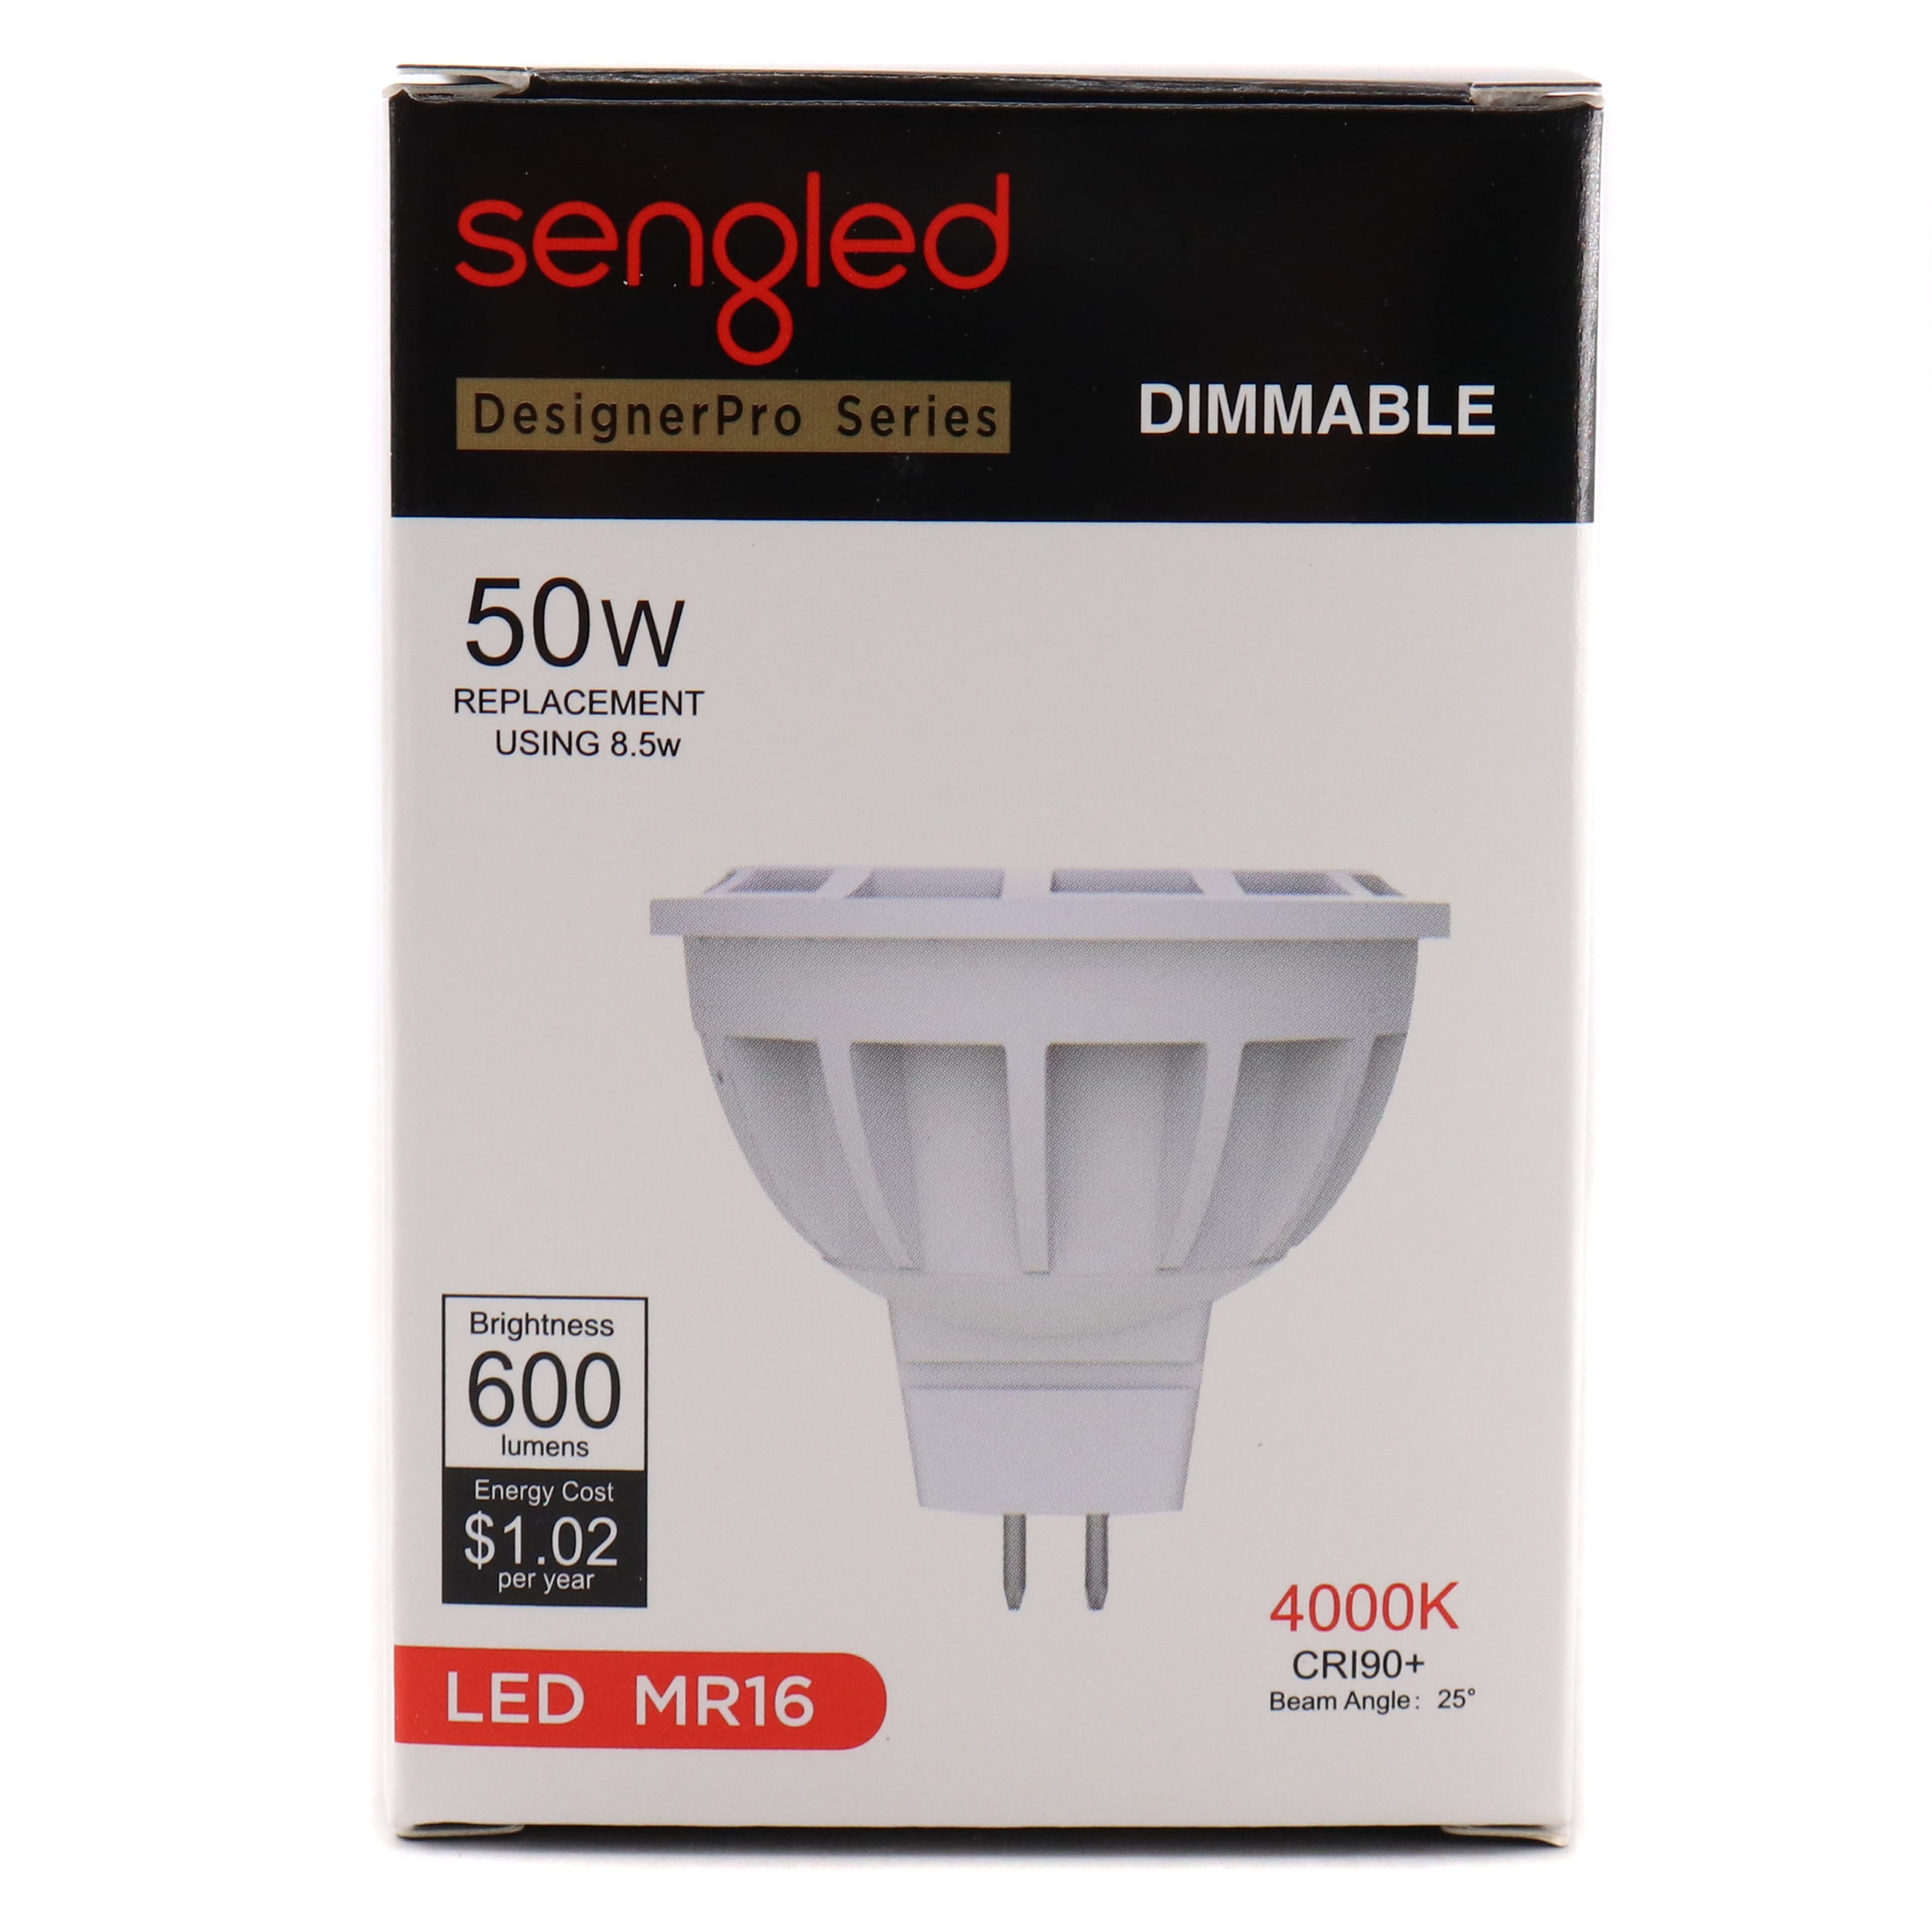 Sengled Dimmable Halogen Replacement LED Bulb, MR16 GU5.3 Lamp, 12V, 8.5W,  600-Lumen, 4K, 25° 